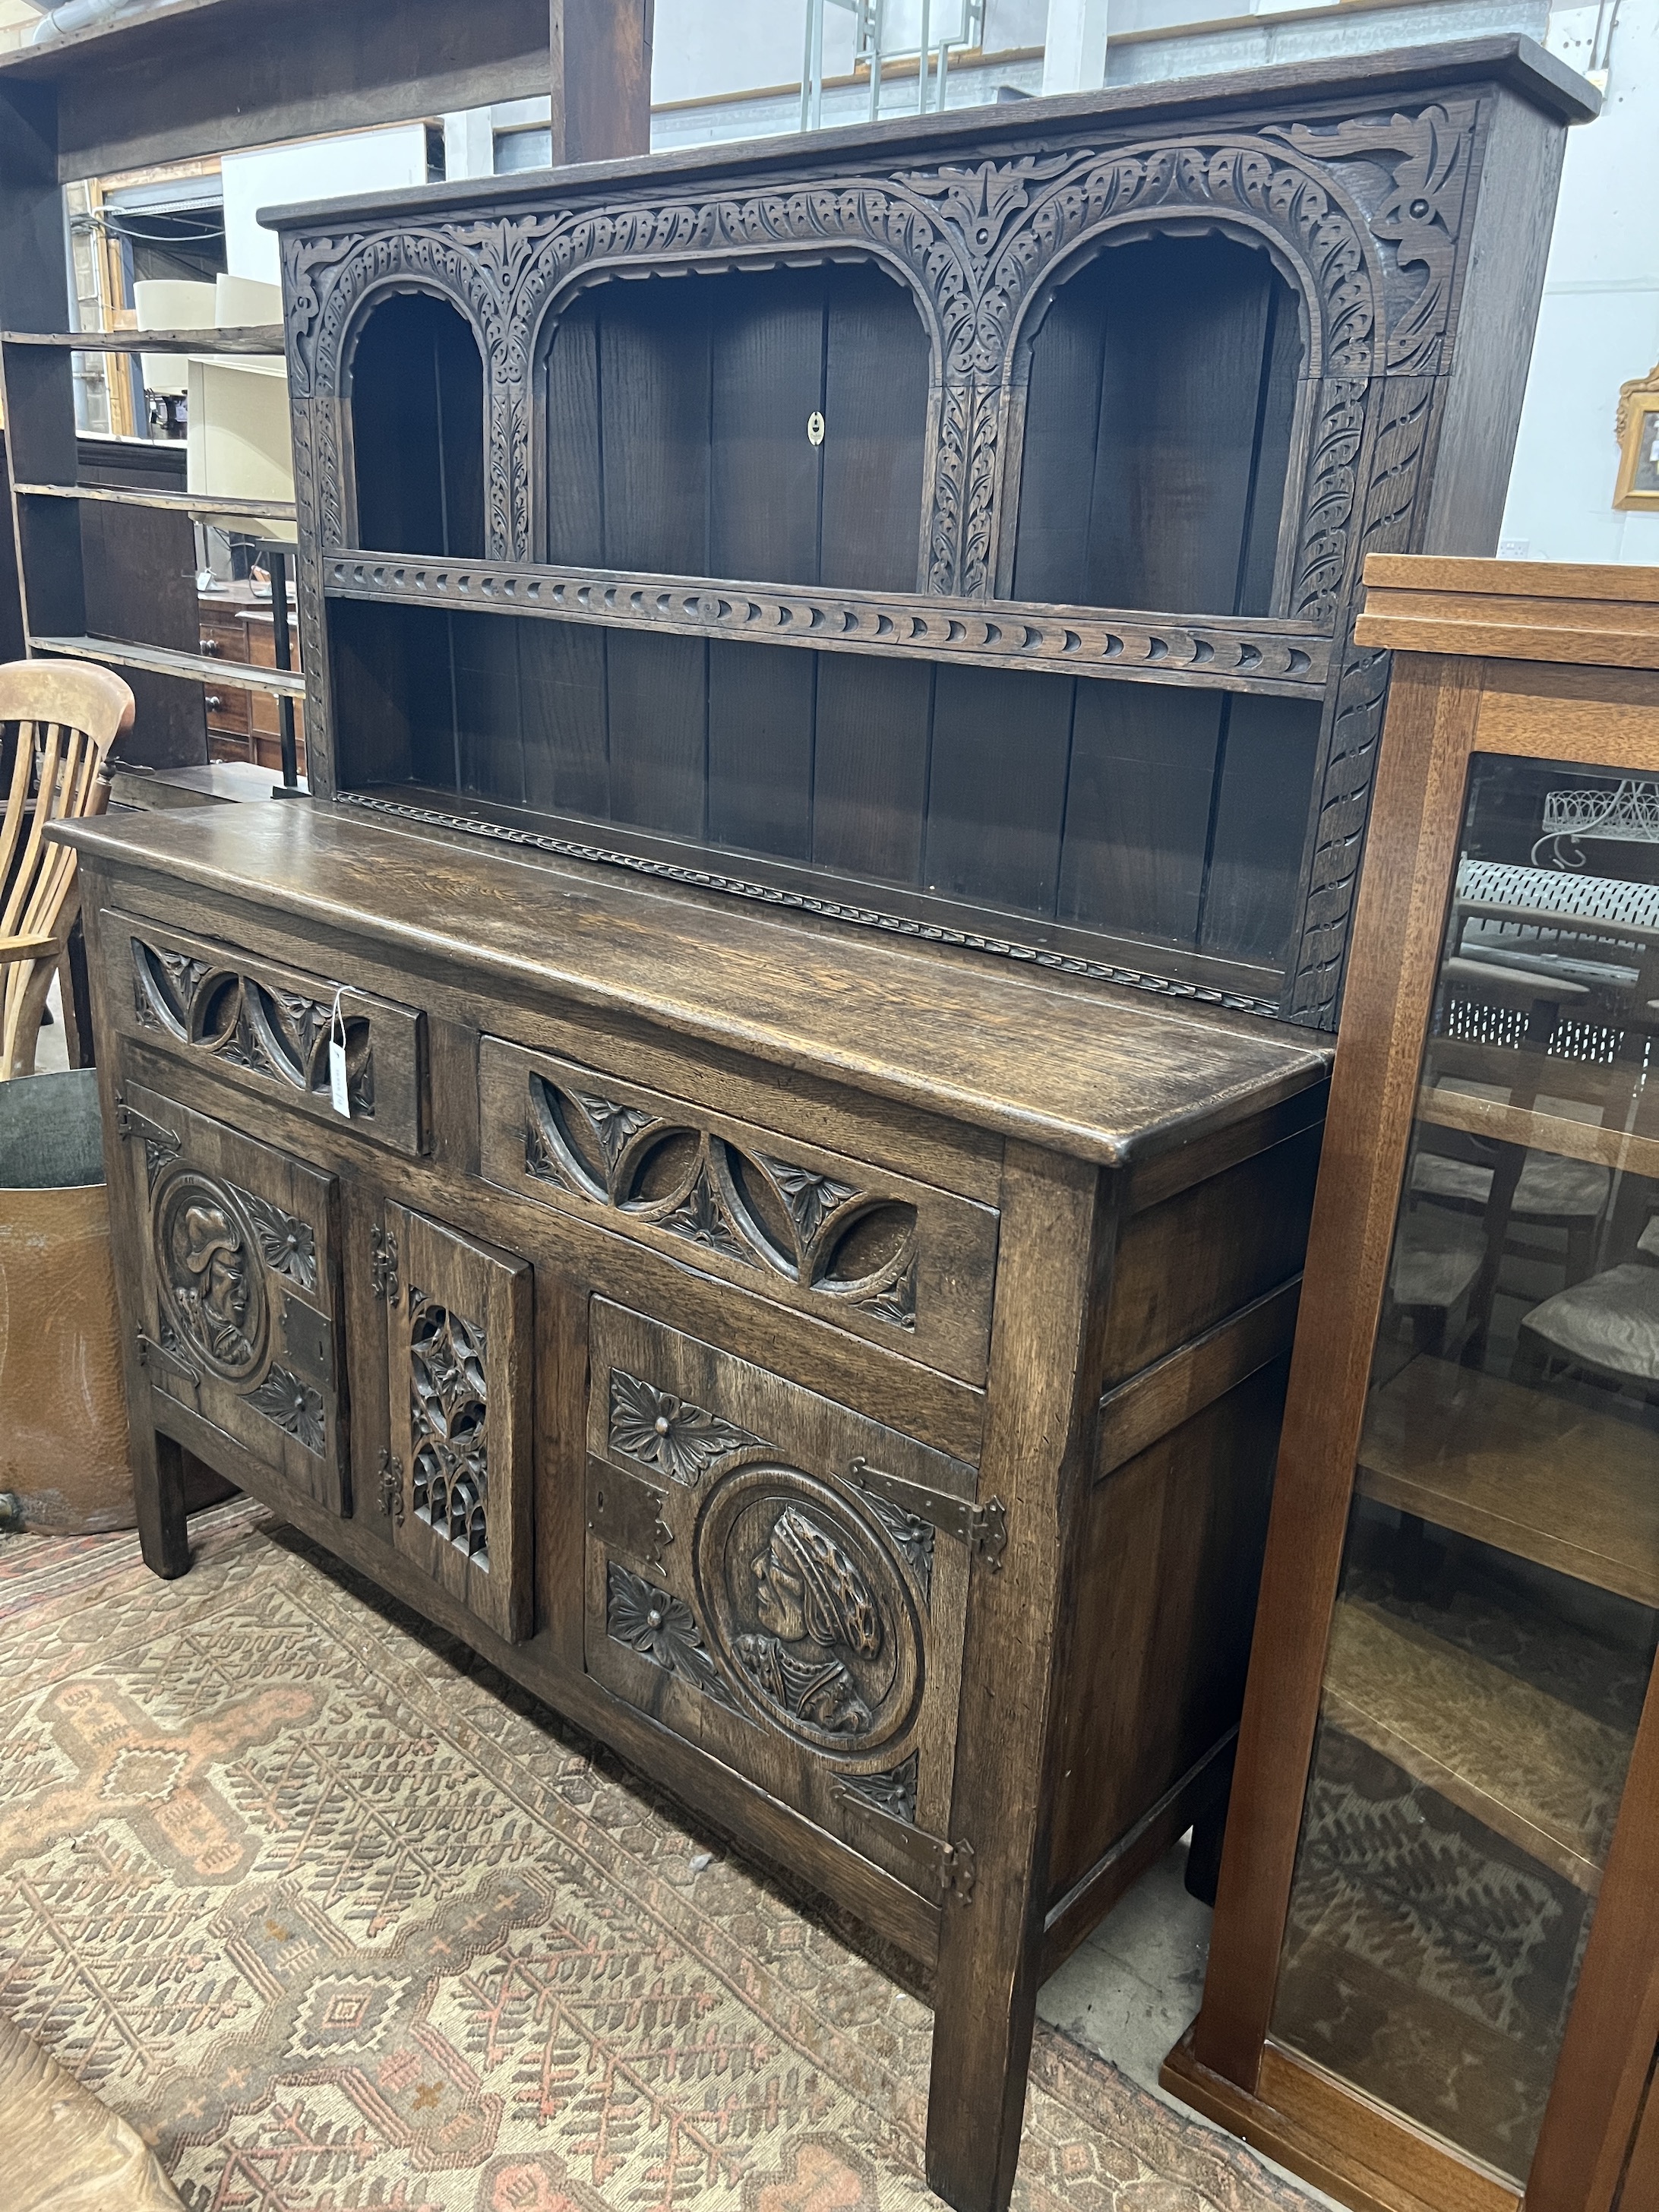 A 17th century style “Tudor Furniture” carved oak dresser, width 146cm, depth 53cm, height 168cm